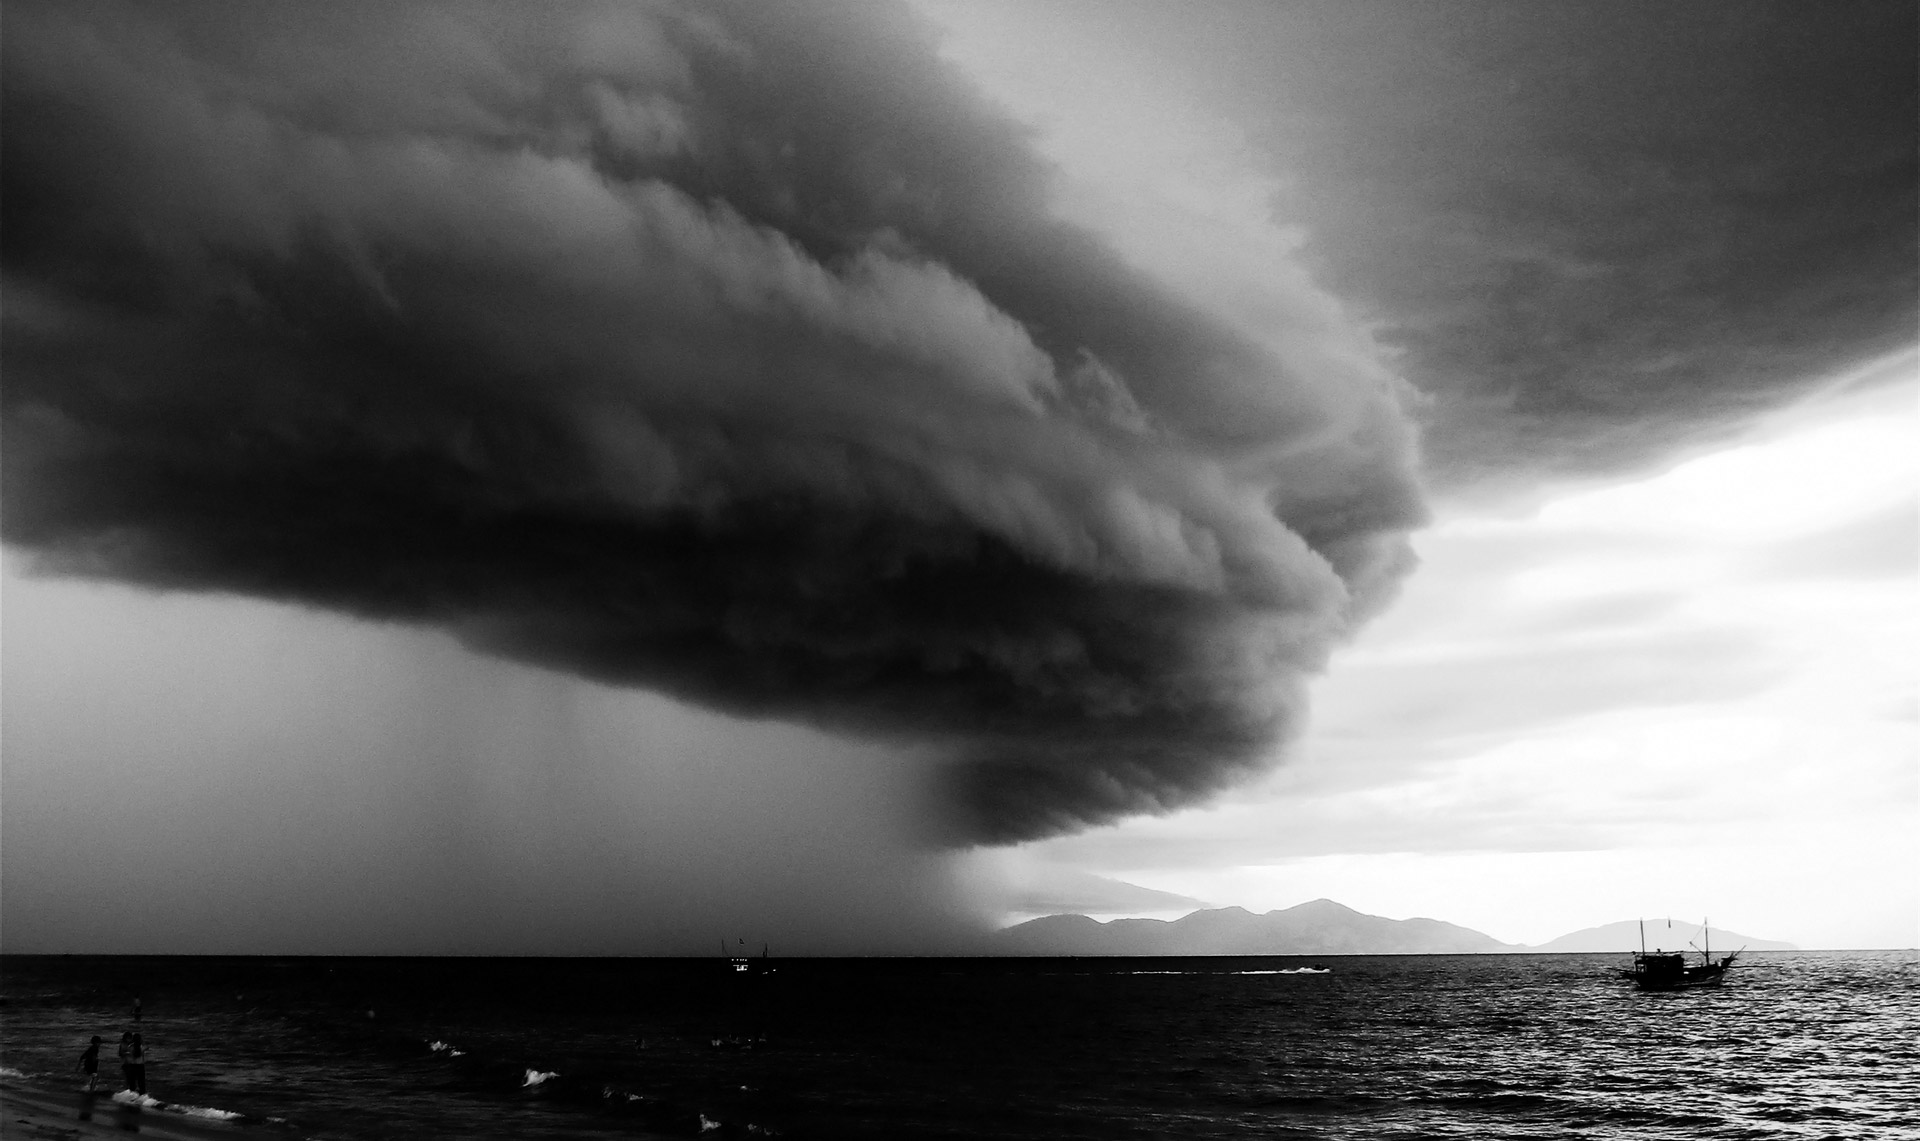 A thunderstorm at Cua Dai Beach, Hoi An Town, Quang Nam Province, Central of Vietnam.